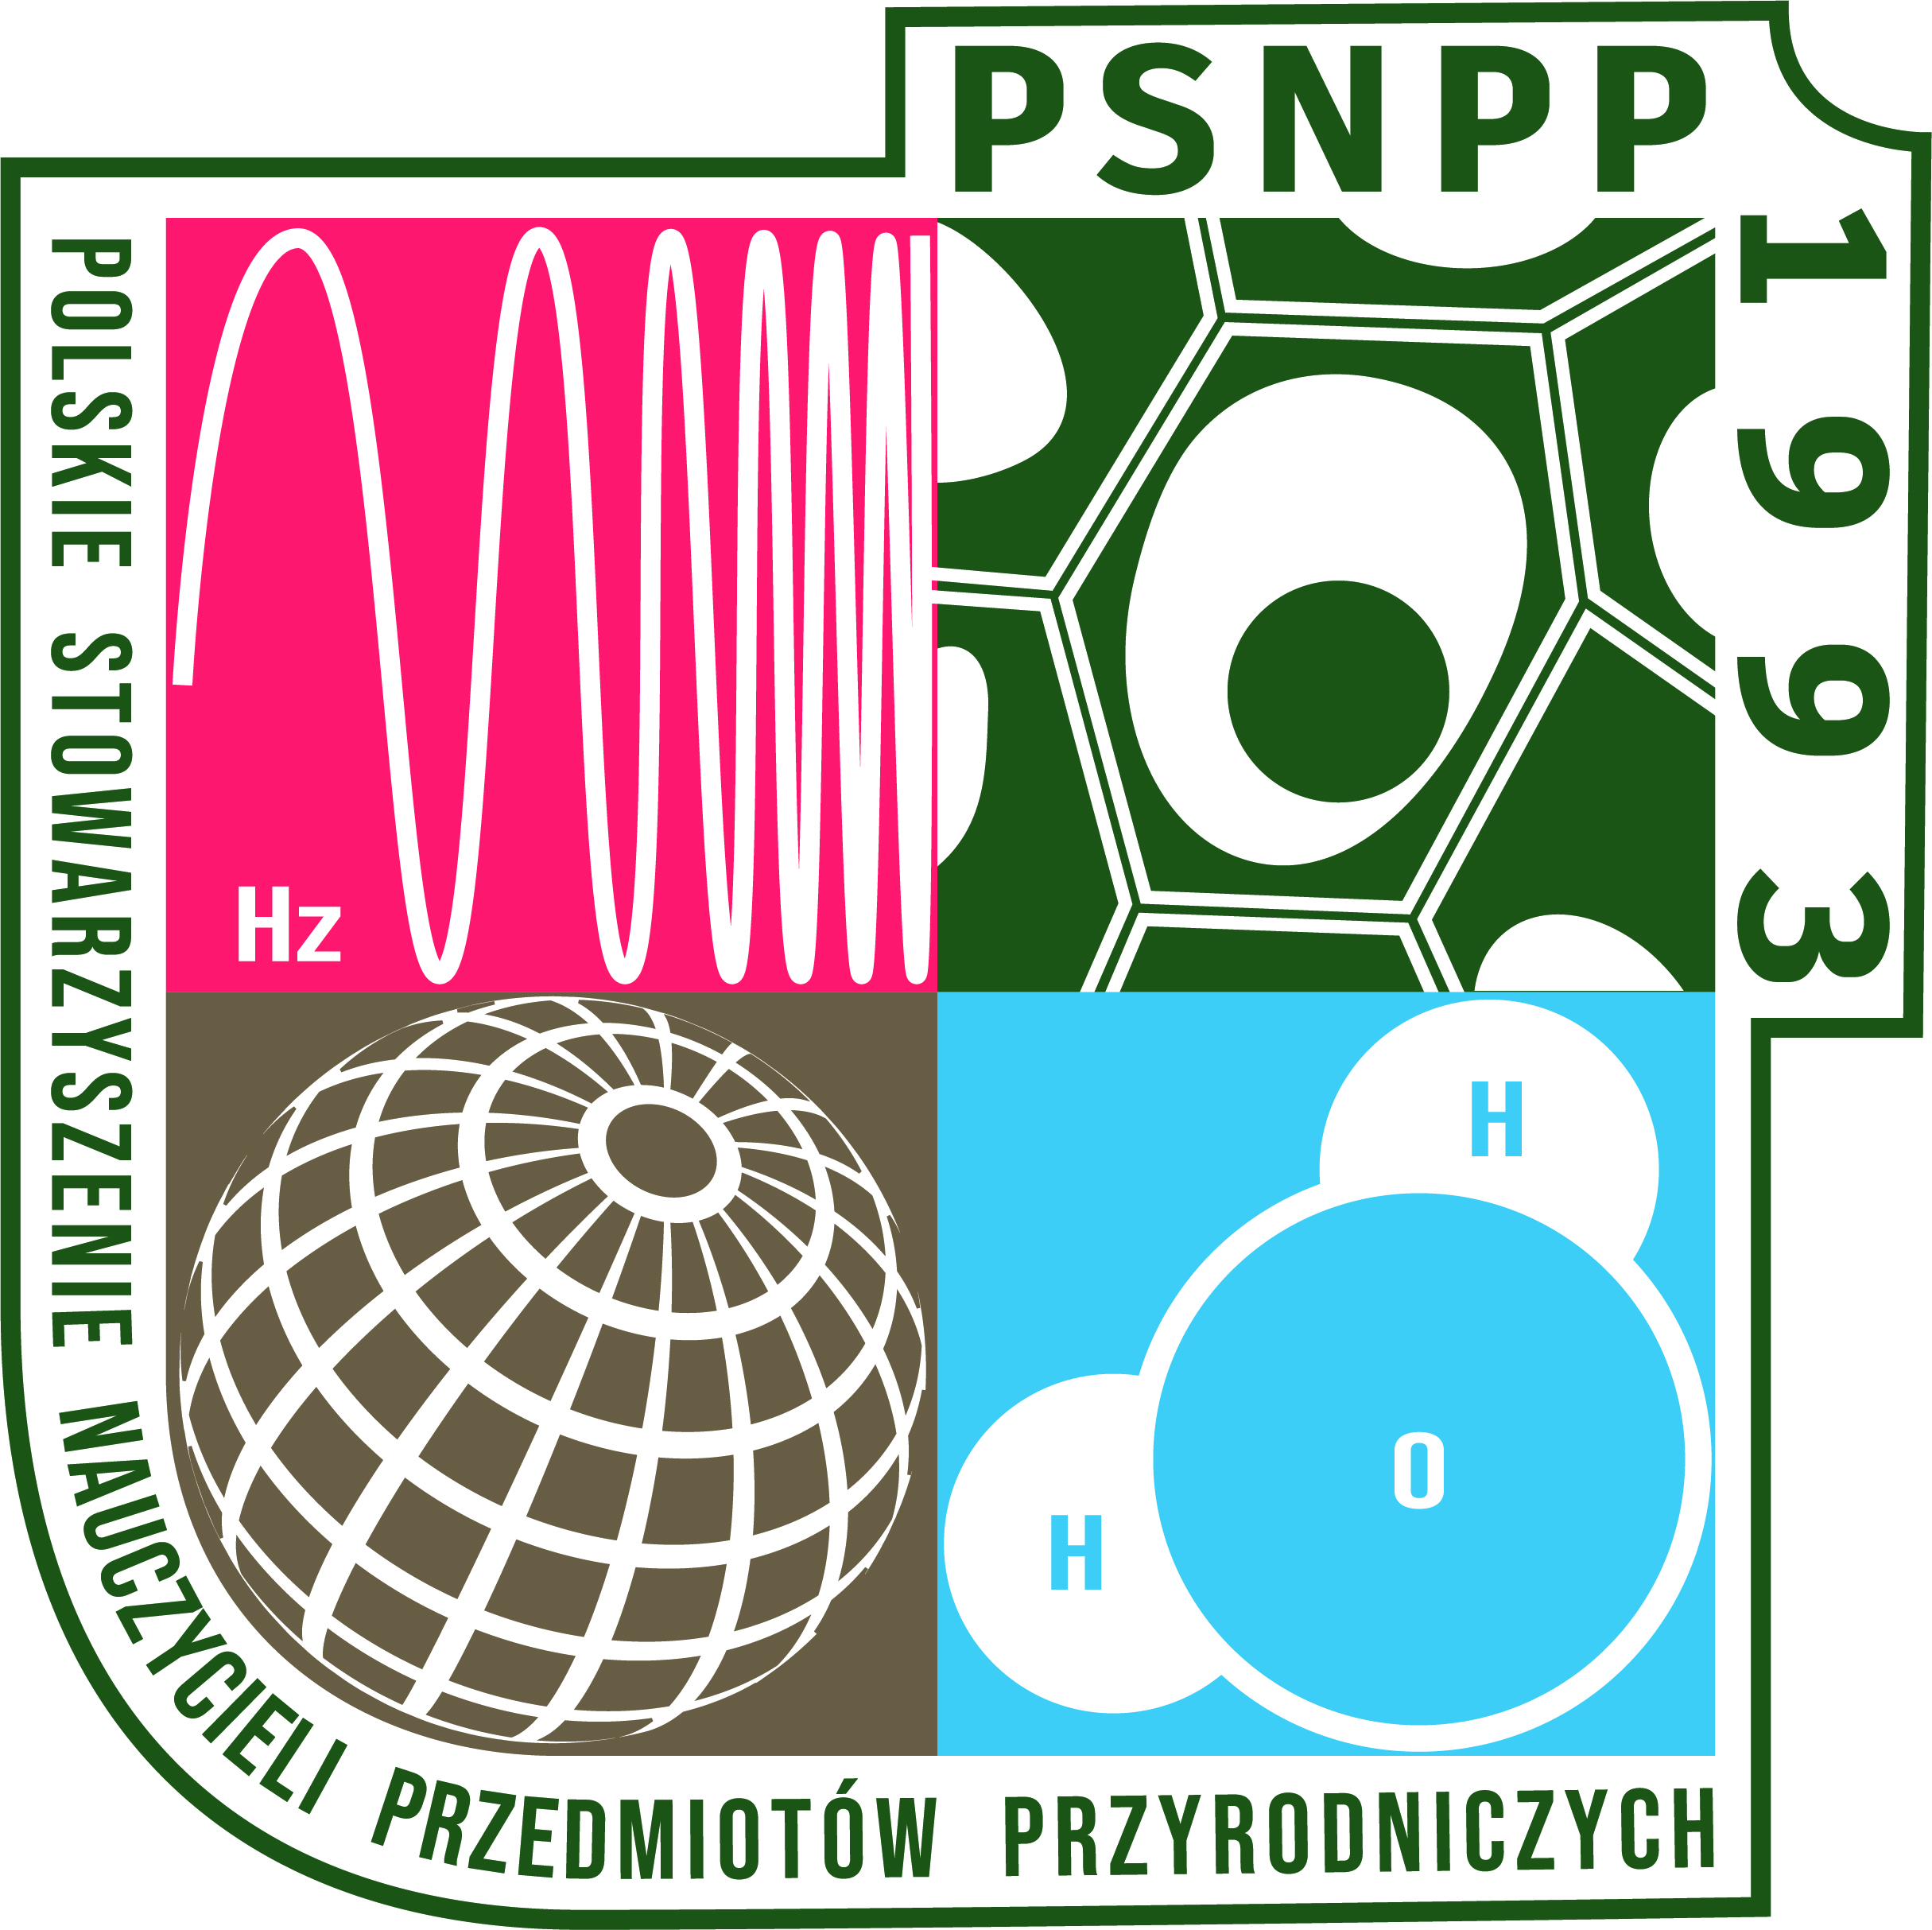 PSNPP